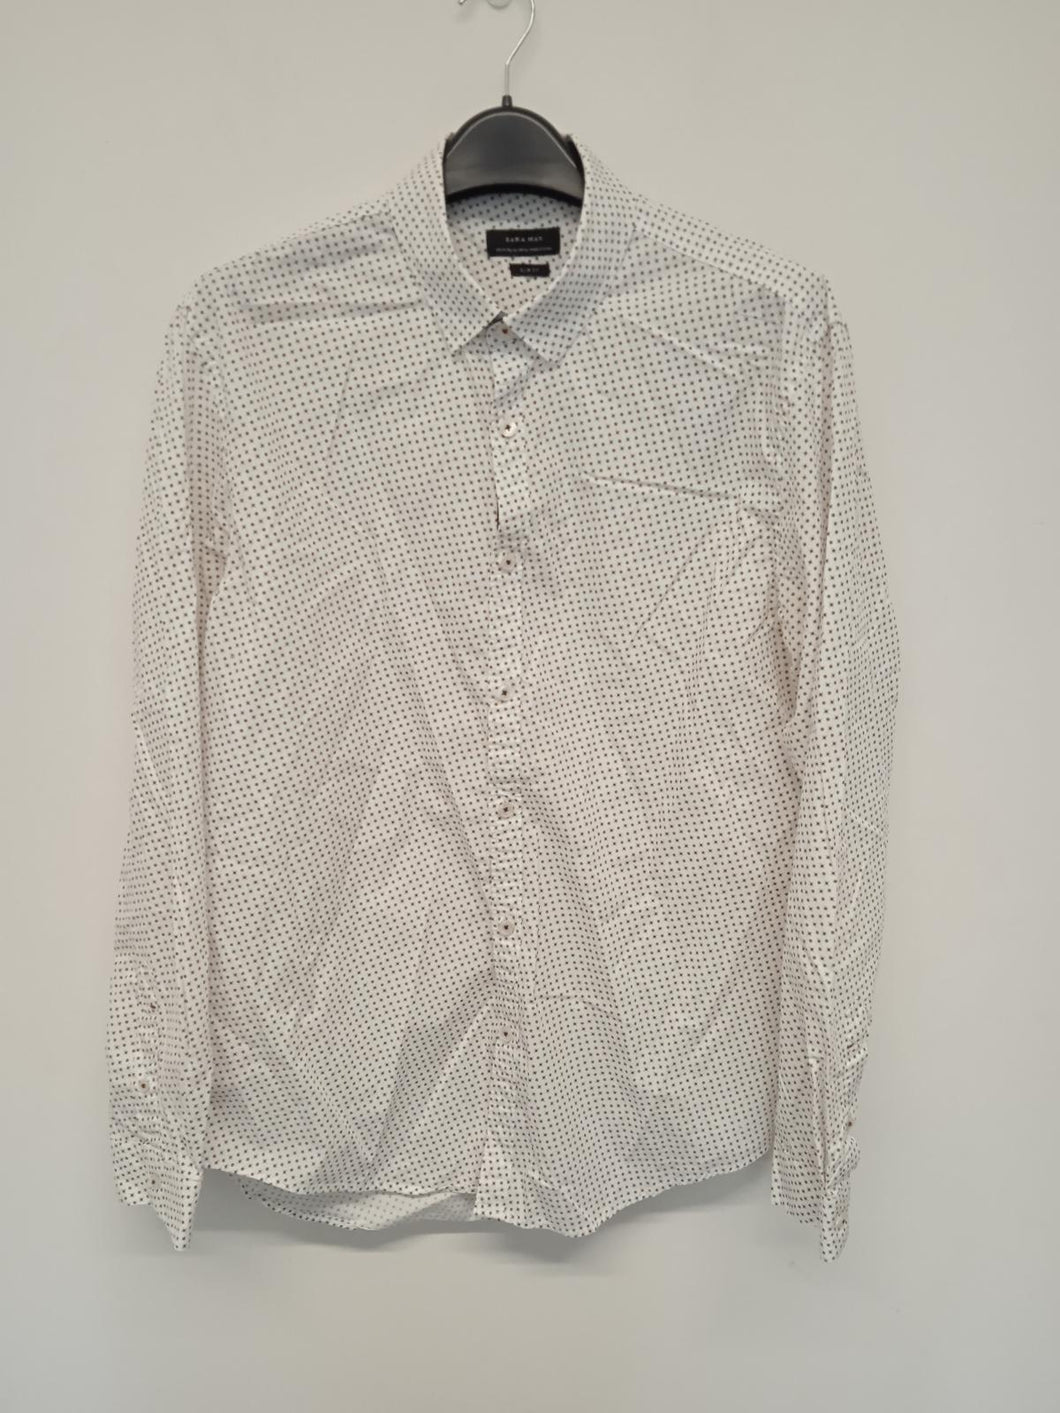 ZARA Men's White Cotton Long Sleeve Button-Up Patterned Slim Fit Shirt Size XL